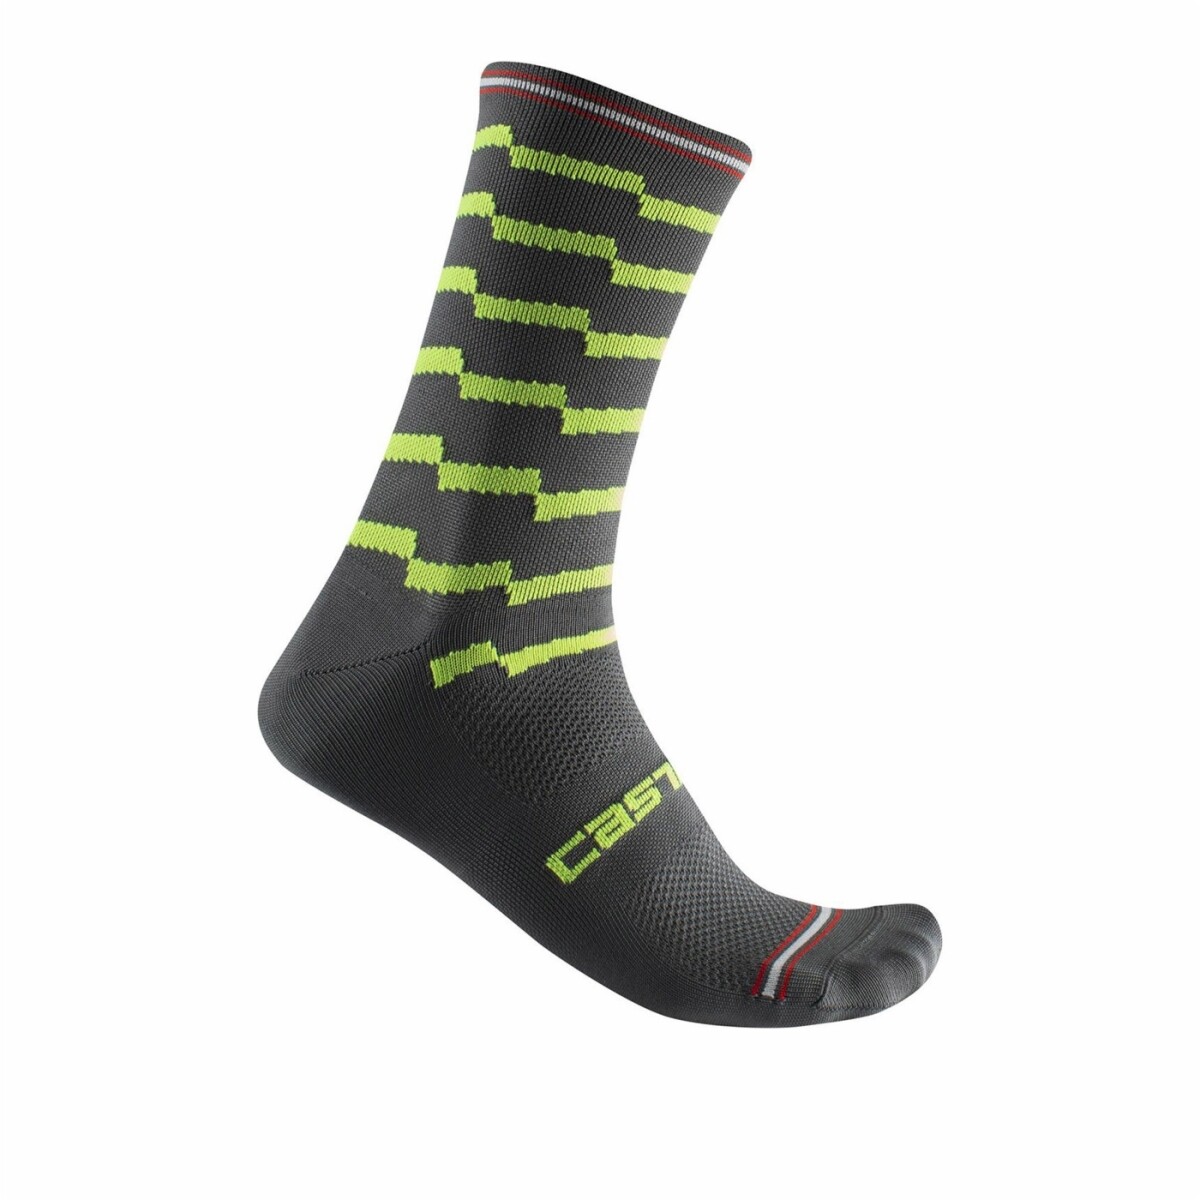 Castelli Unlimited 18 Socks - Dark Gray/Electric Lime